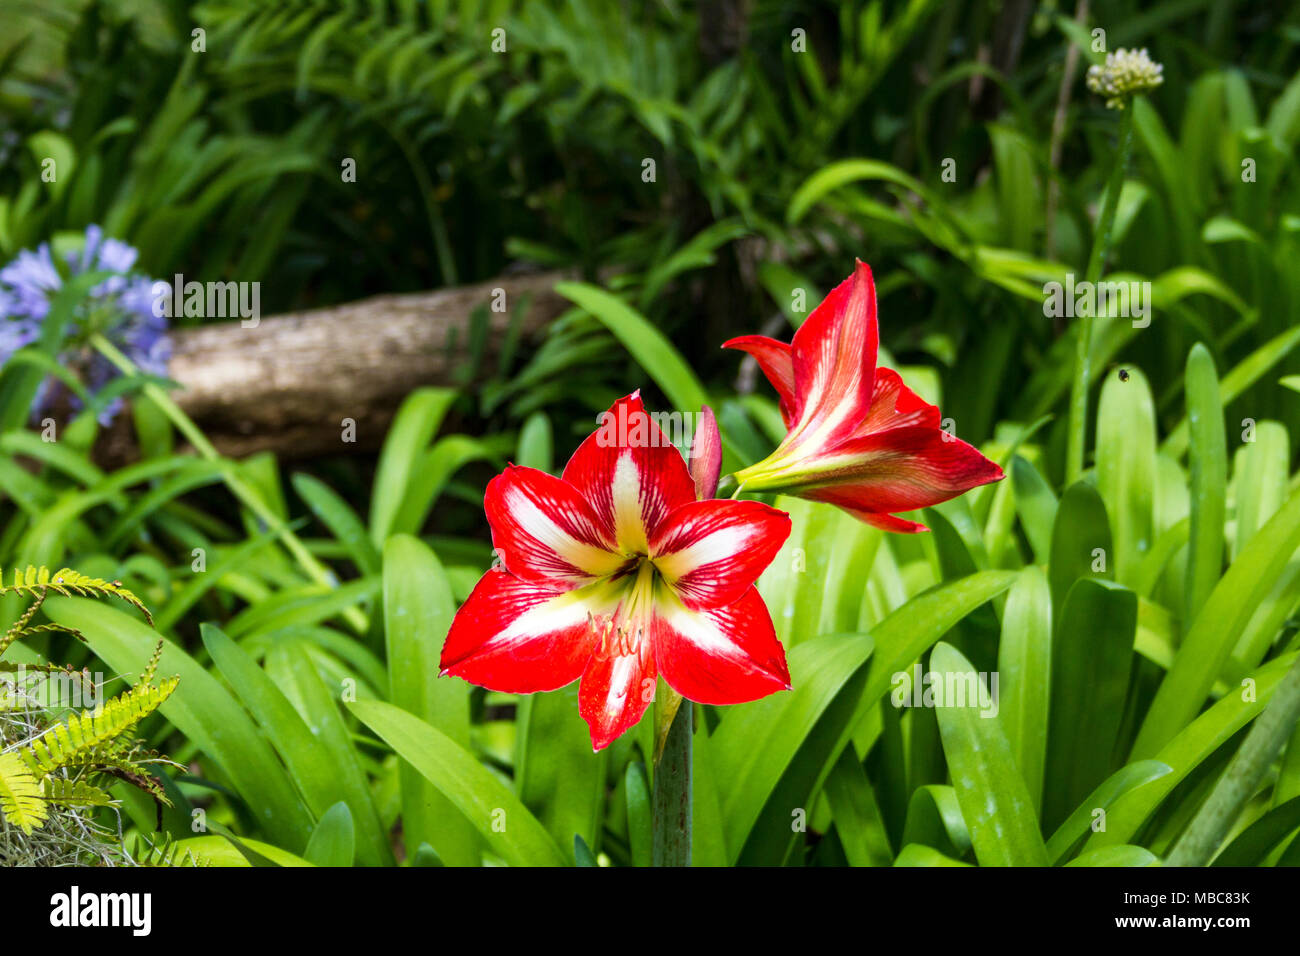 Colourful red and white double bloomed amaryllis in Mi Jardin es su Jardin ornamental garden in Boquete, Panama Stock Photo